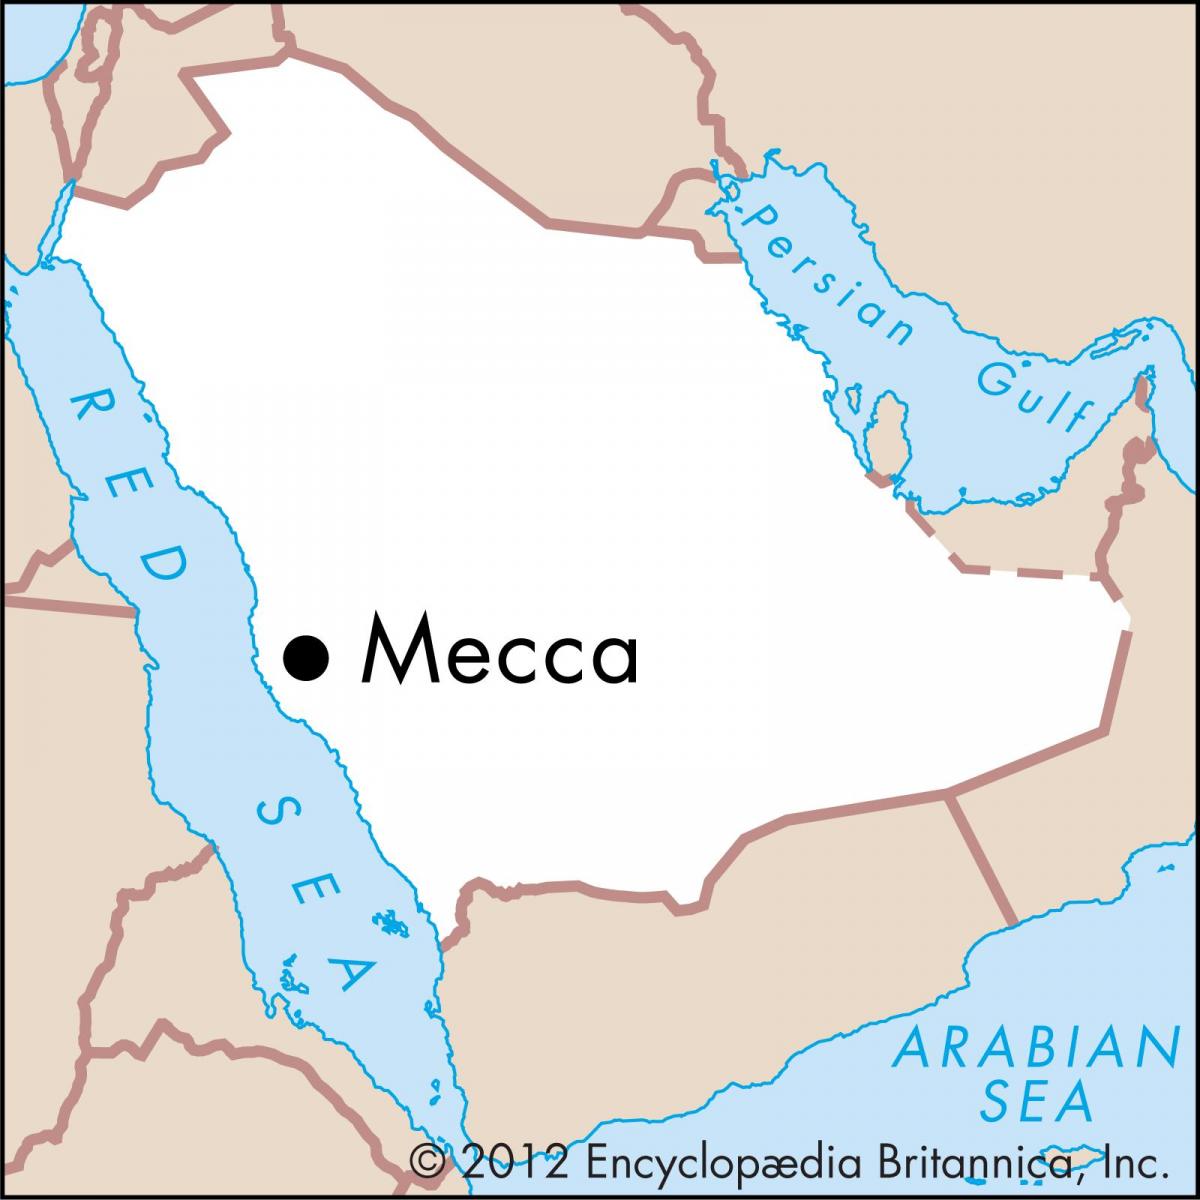 zemljevid masarat kraljestvu 3 Makkah